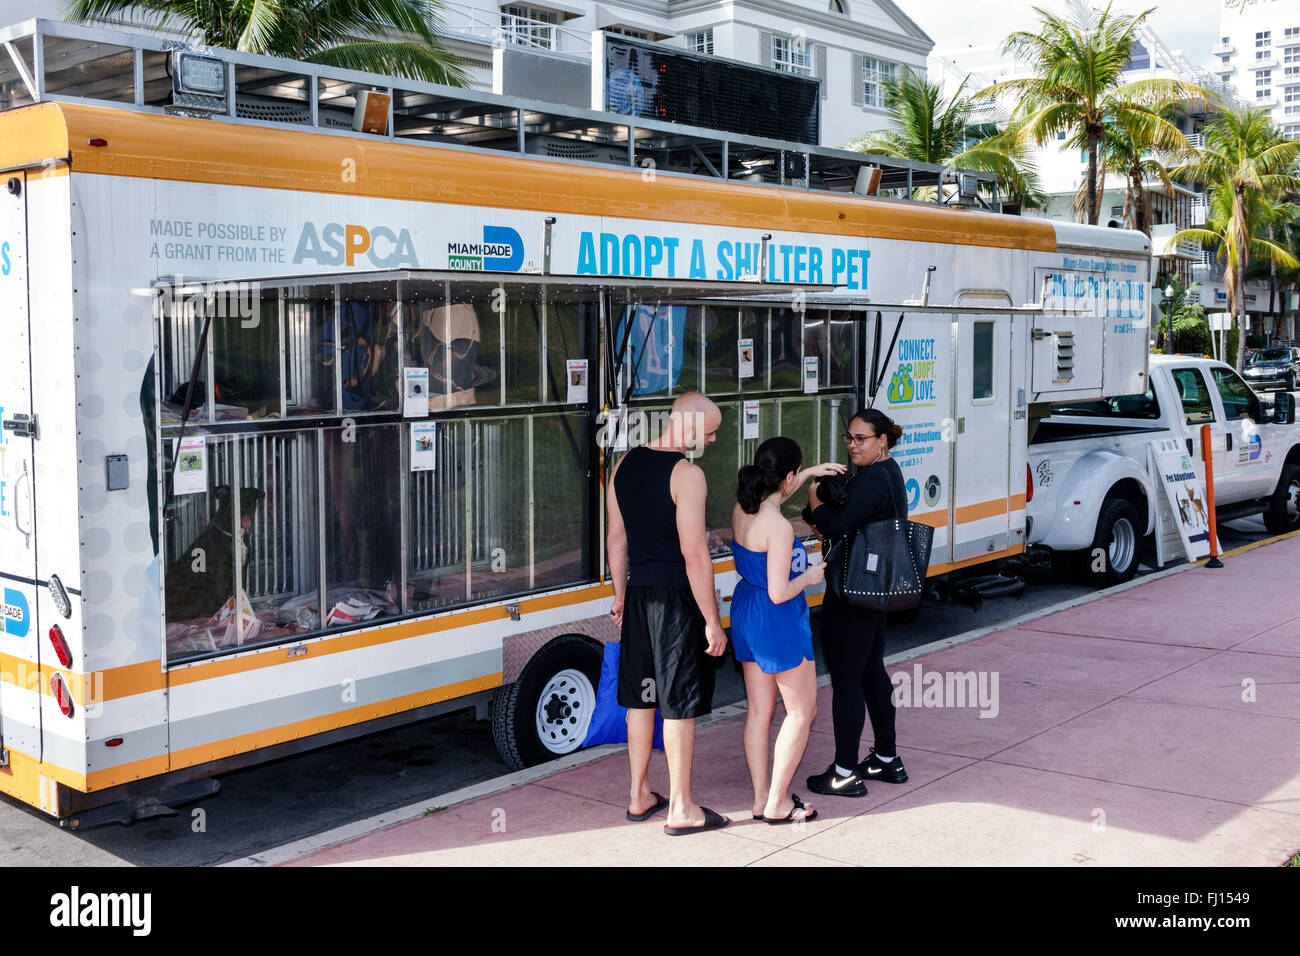 Miami Beach Florida,mobile adopt animal shelter pet,trailer,adopting,adult,adults,man men male,woman female women,couple,looking,ASPCA,dog,dogs,FL1601 Stock Photo